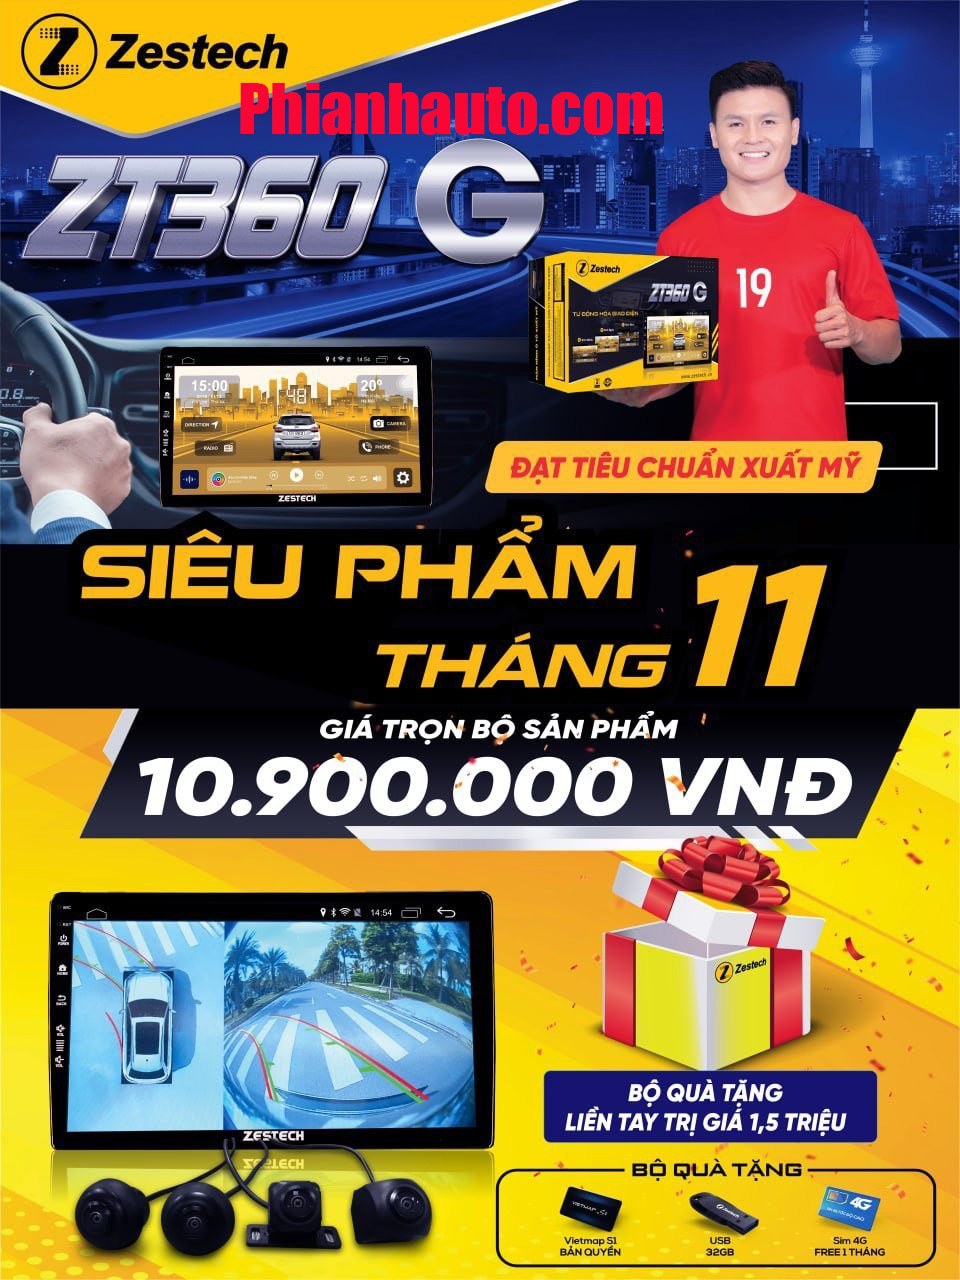 Man Hinh Zt360g